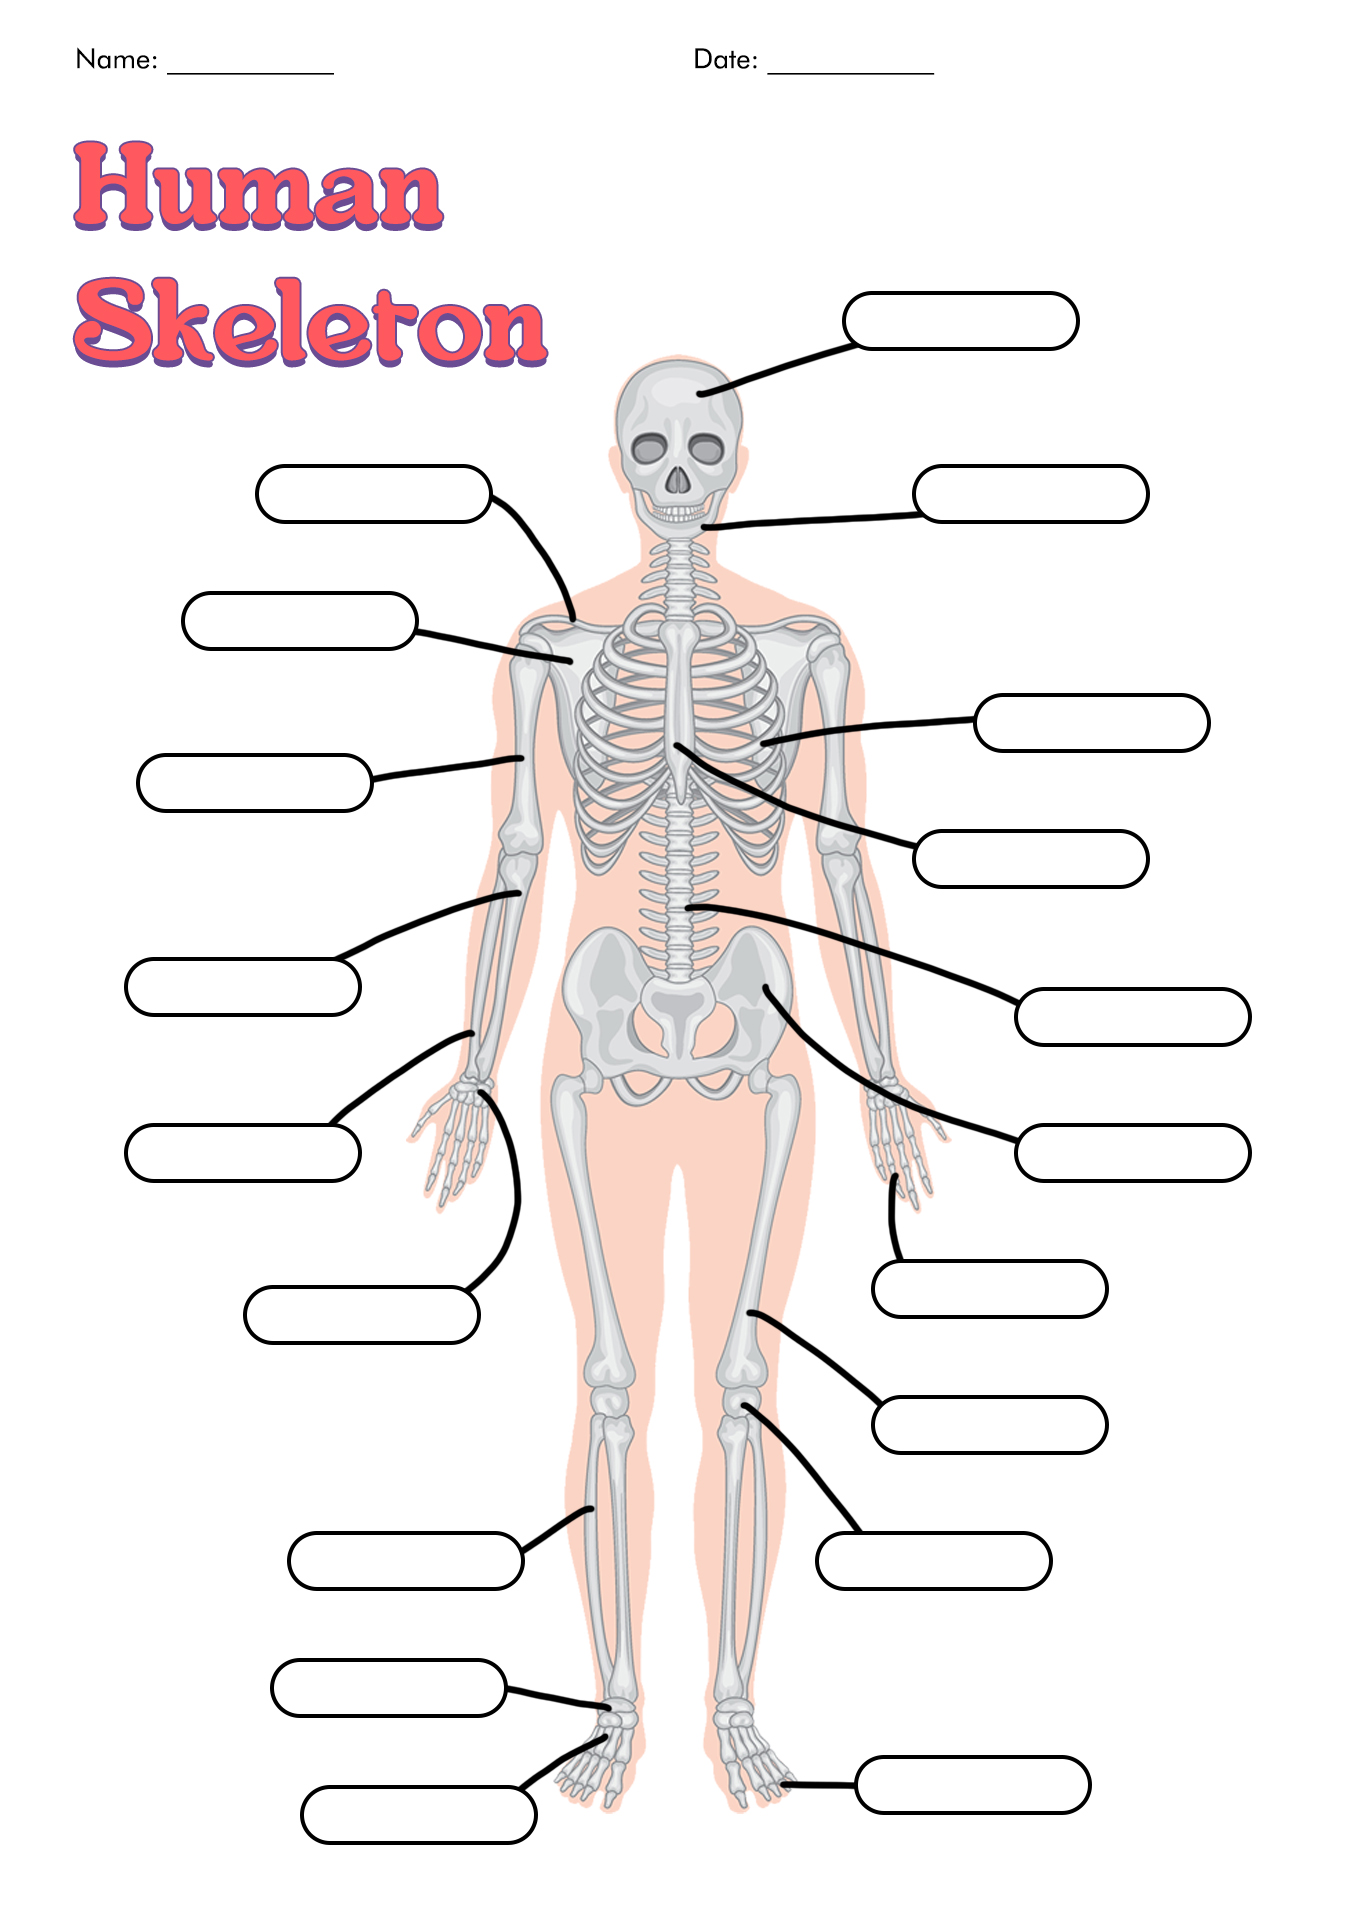 Human Skeleton Template Image